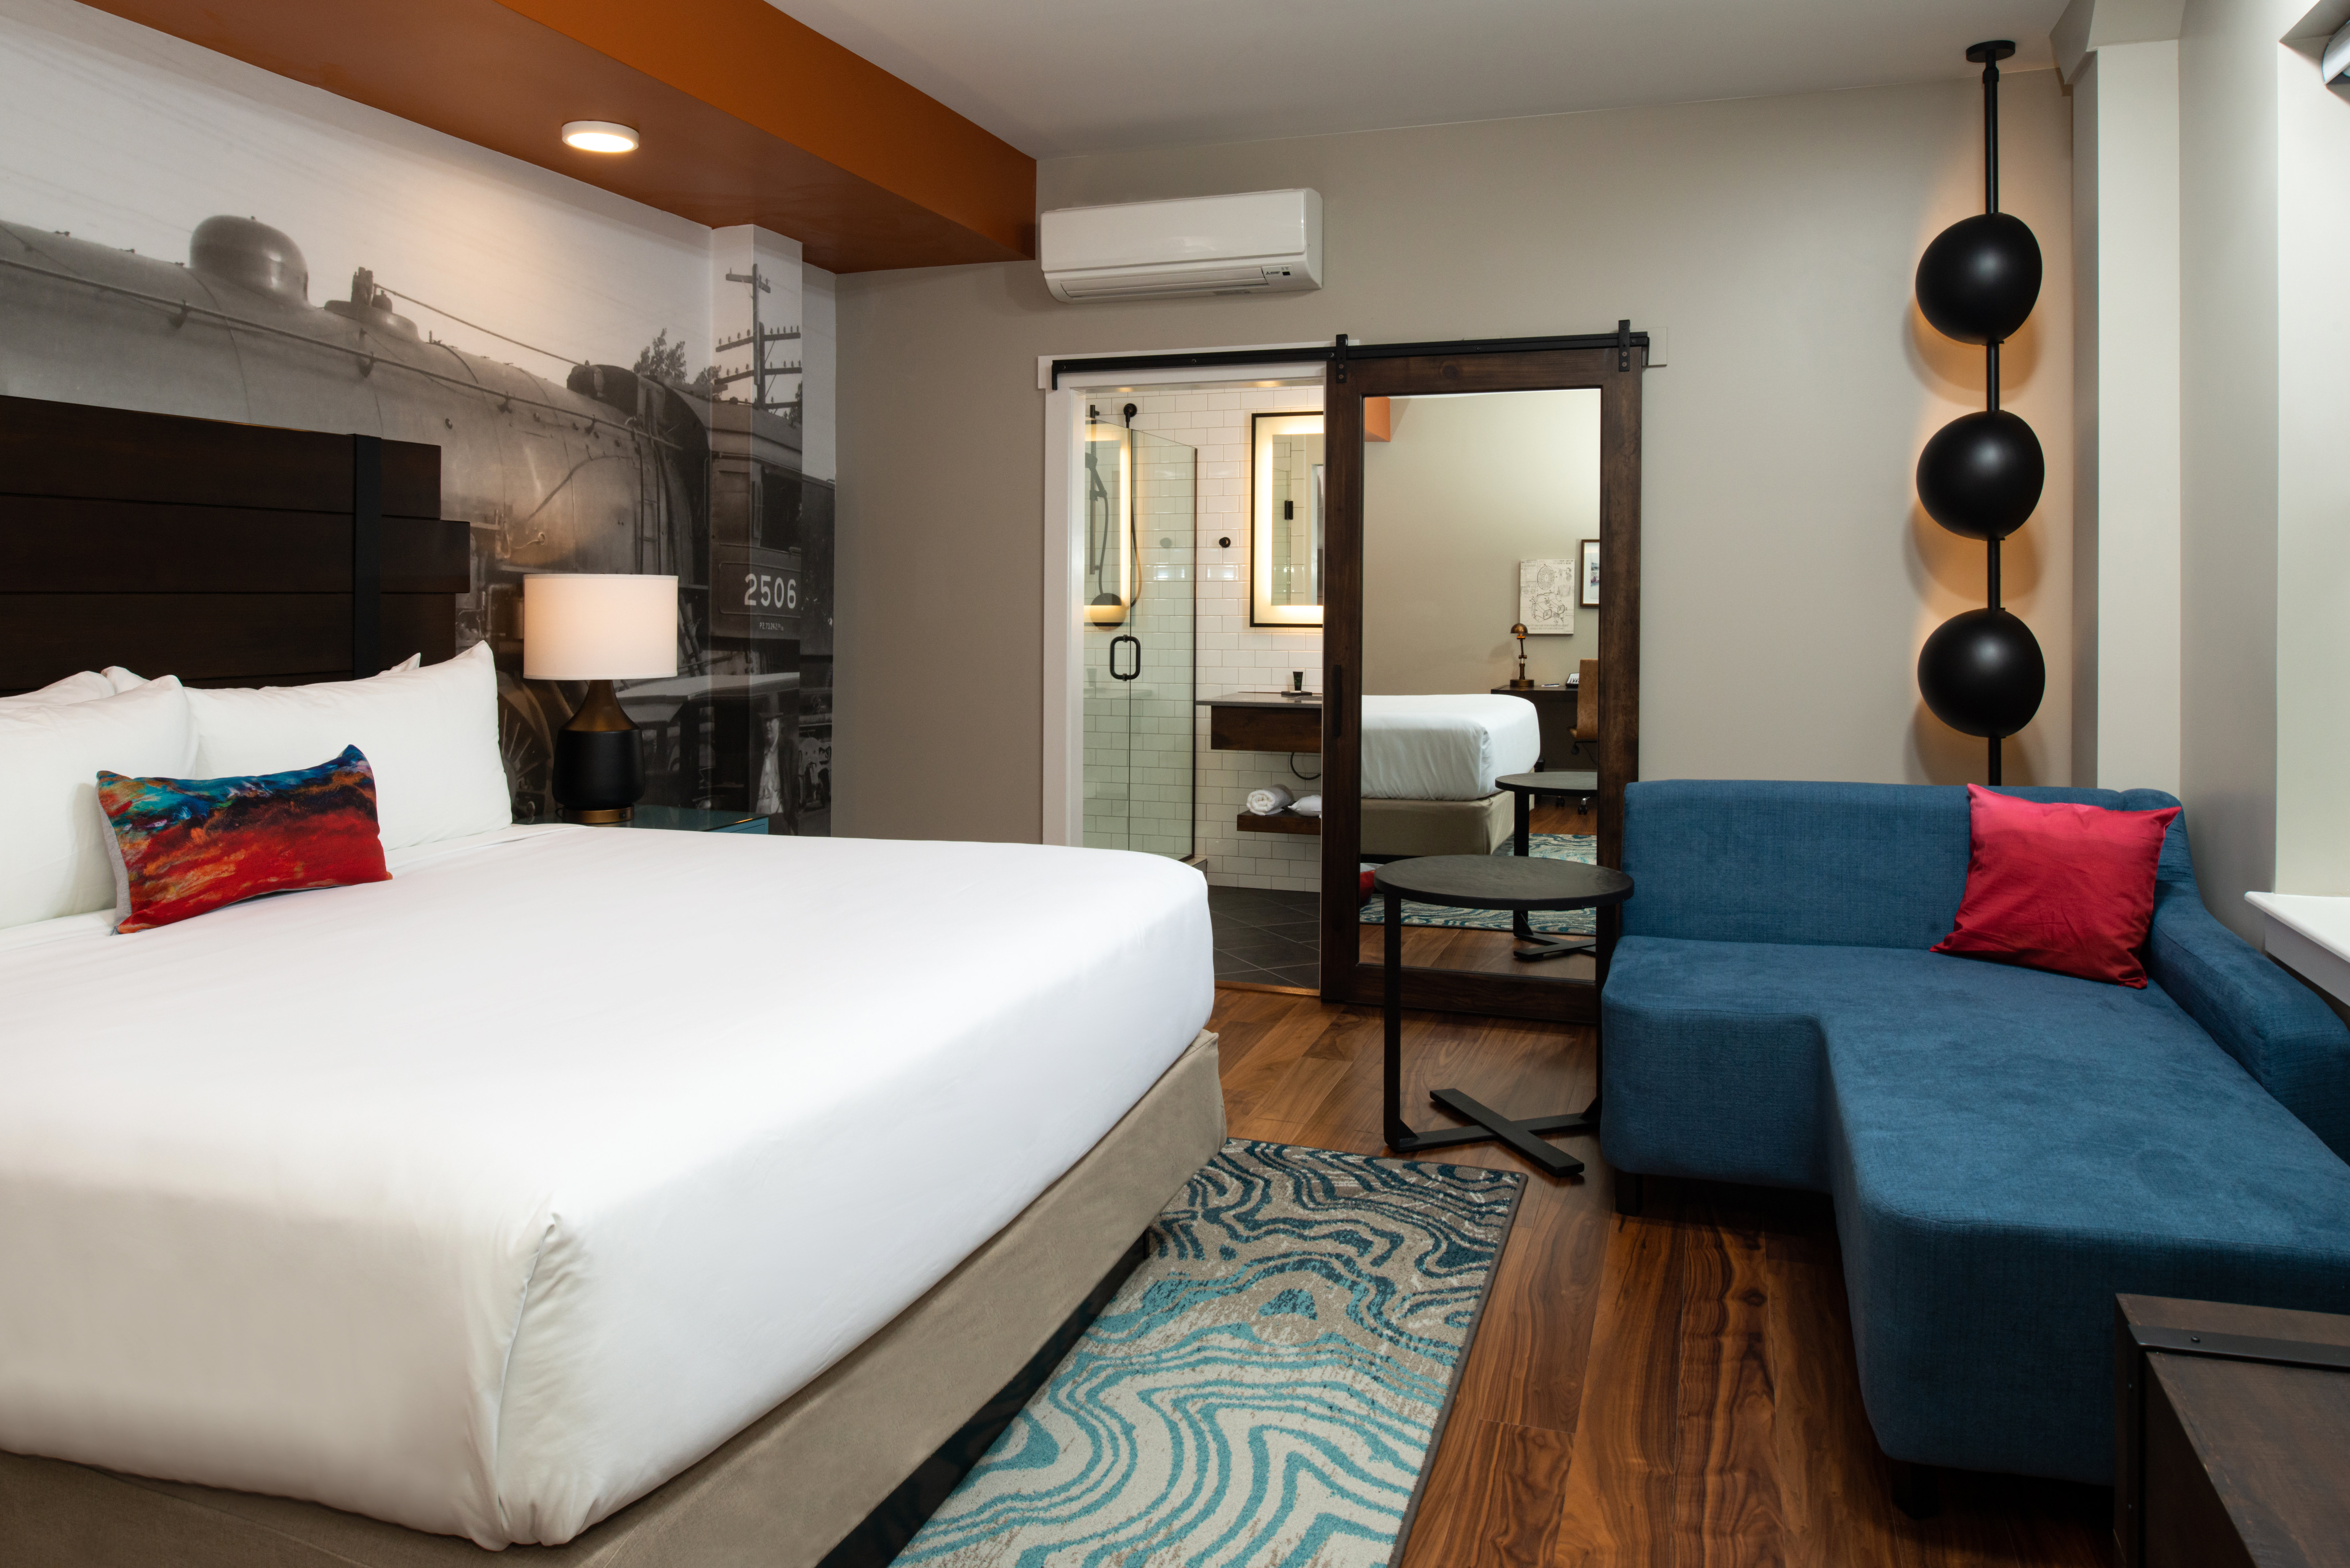 Hotel Indigo Spokane. Standard room with one king bed. 